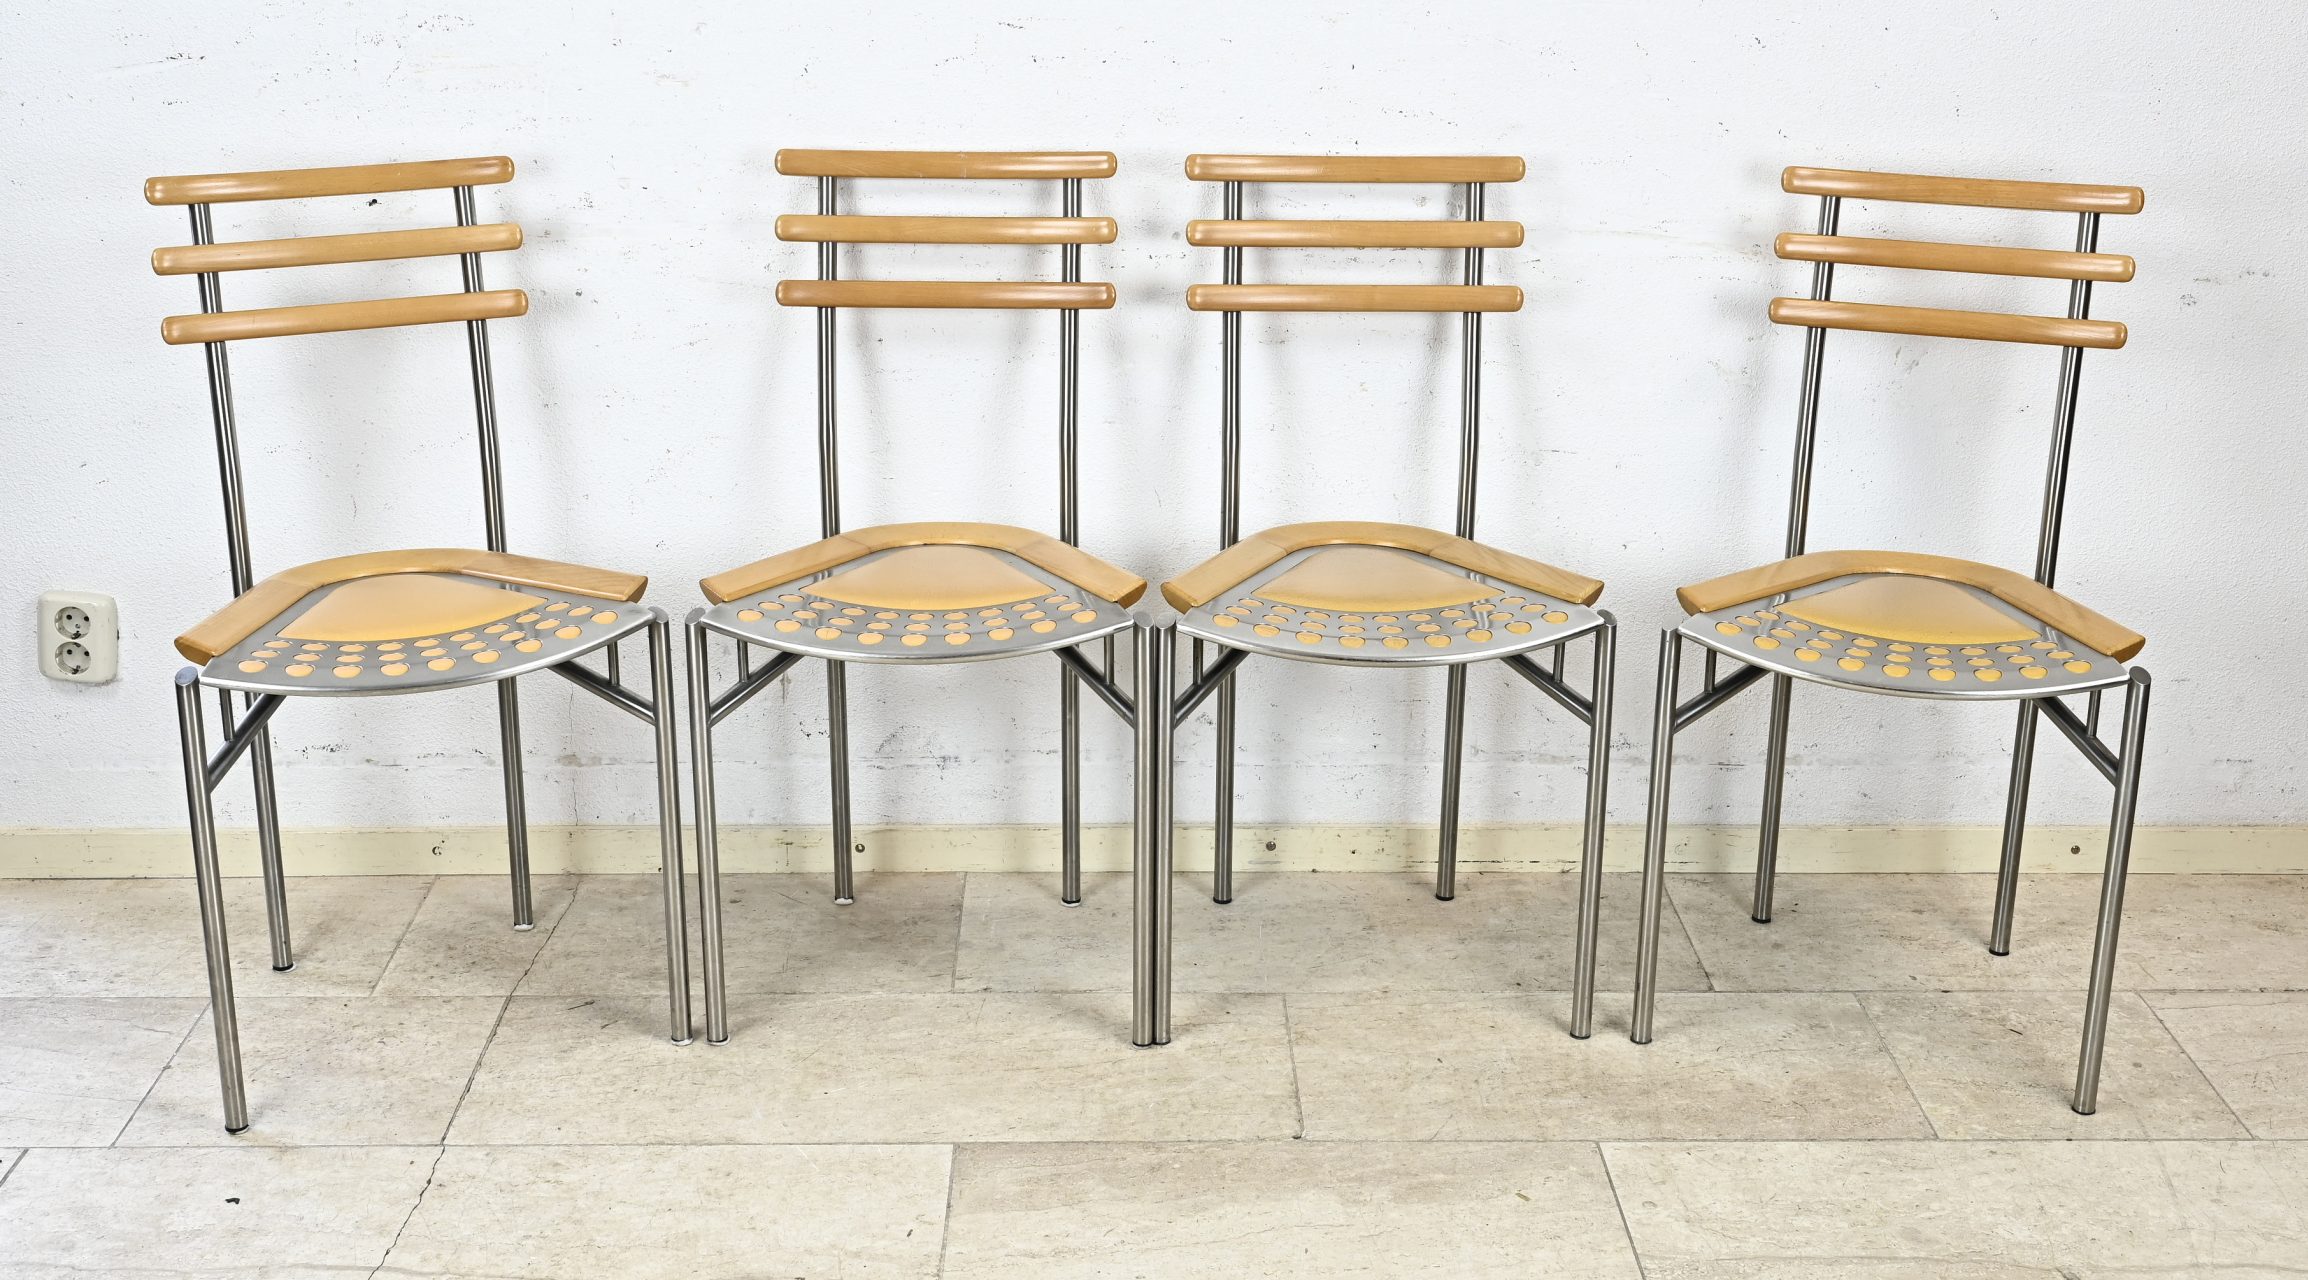 Christian Erker chairs (4 pcs.)